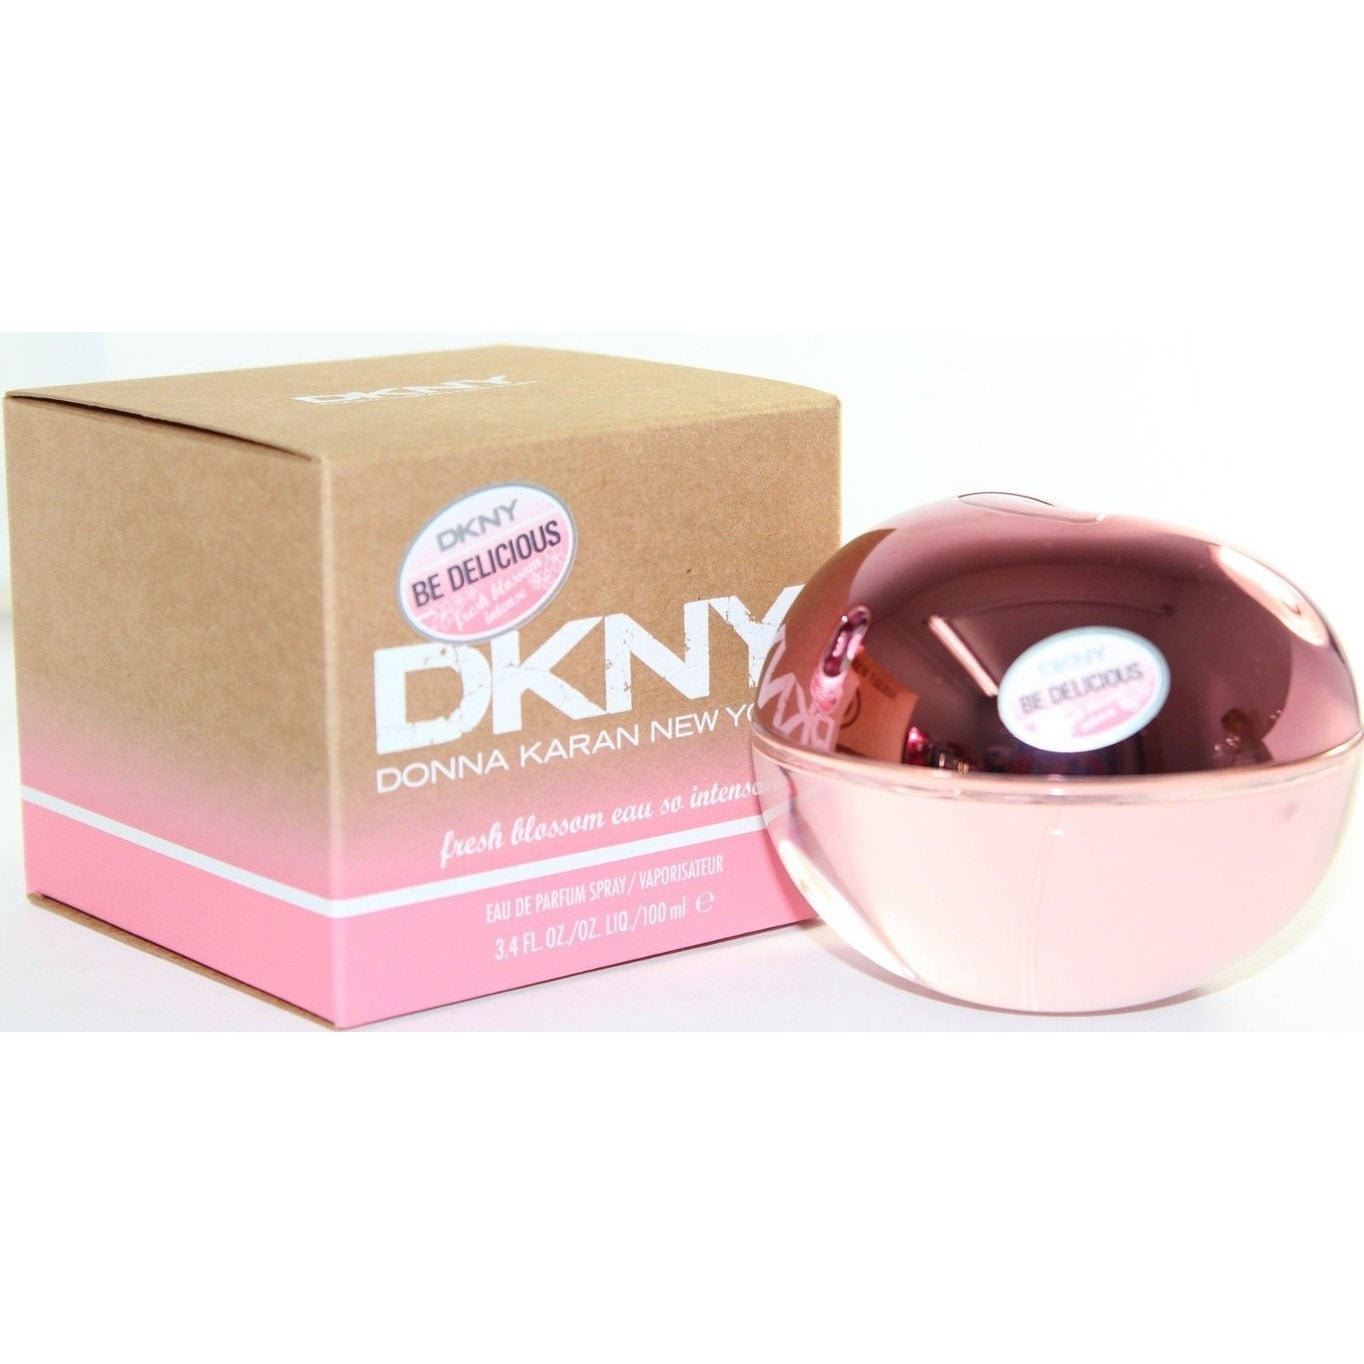 DKNY BE DELICIOUS FRESH BLOSSOM by Donna Karan EAU DE PARFUM SPRAY 3.4 OZ  for WOMEN And a Mystery Name brand sample vile